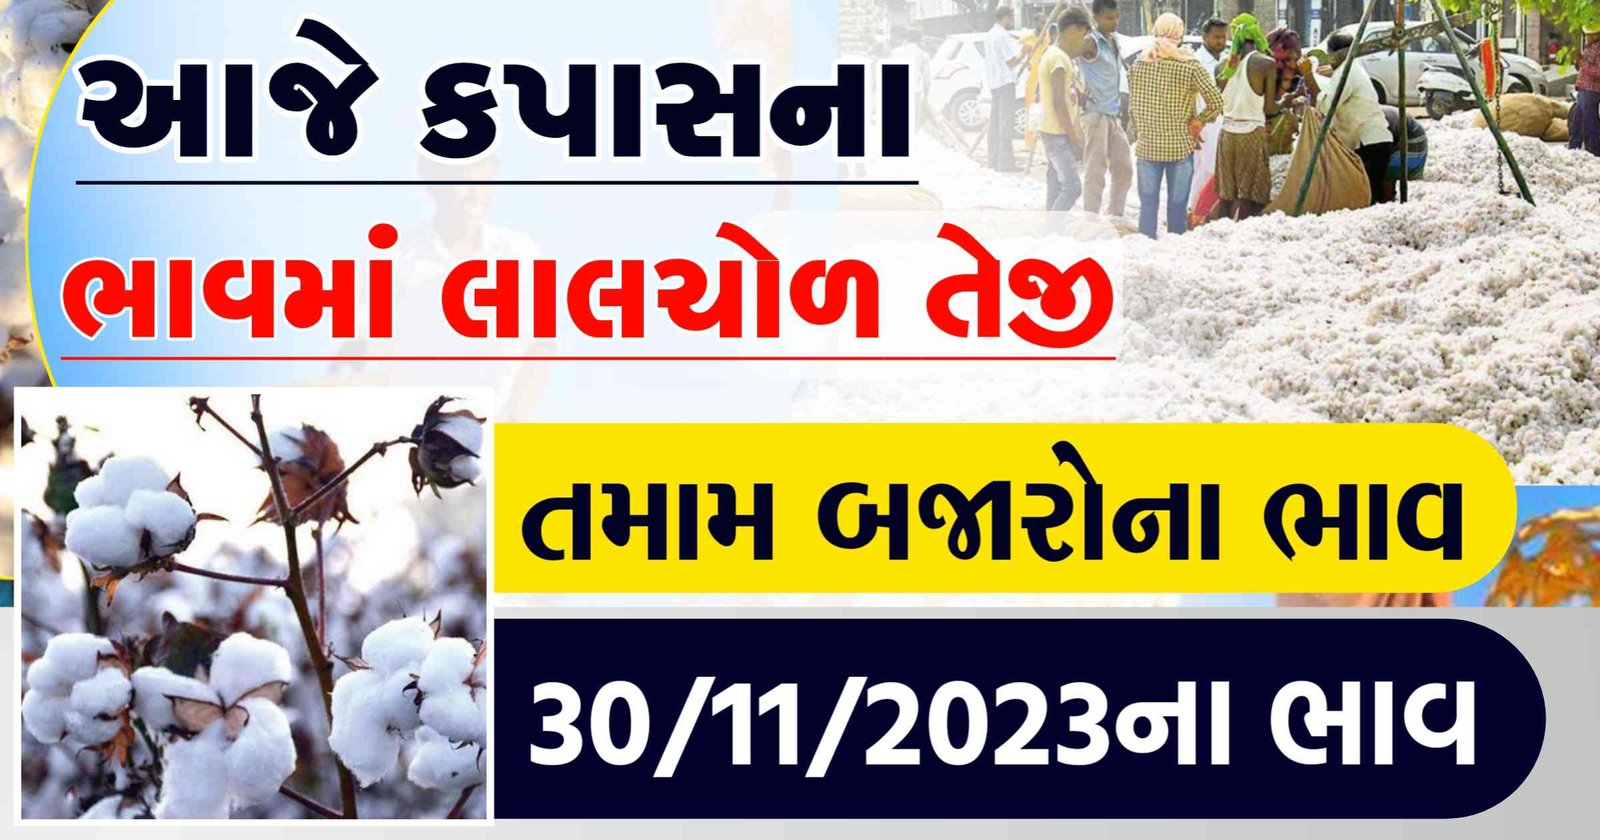 cotton price in gujarat